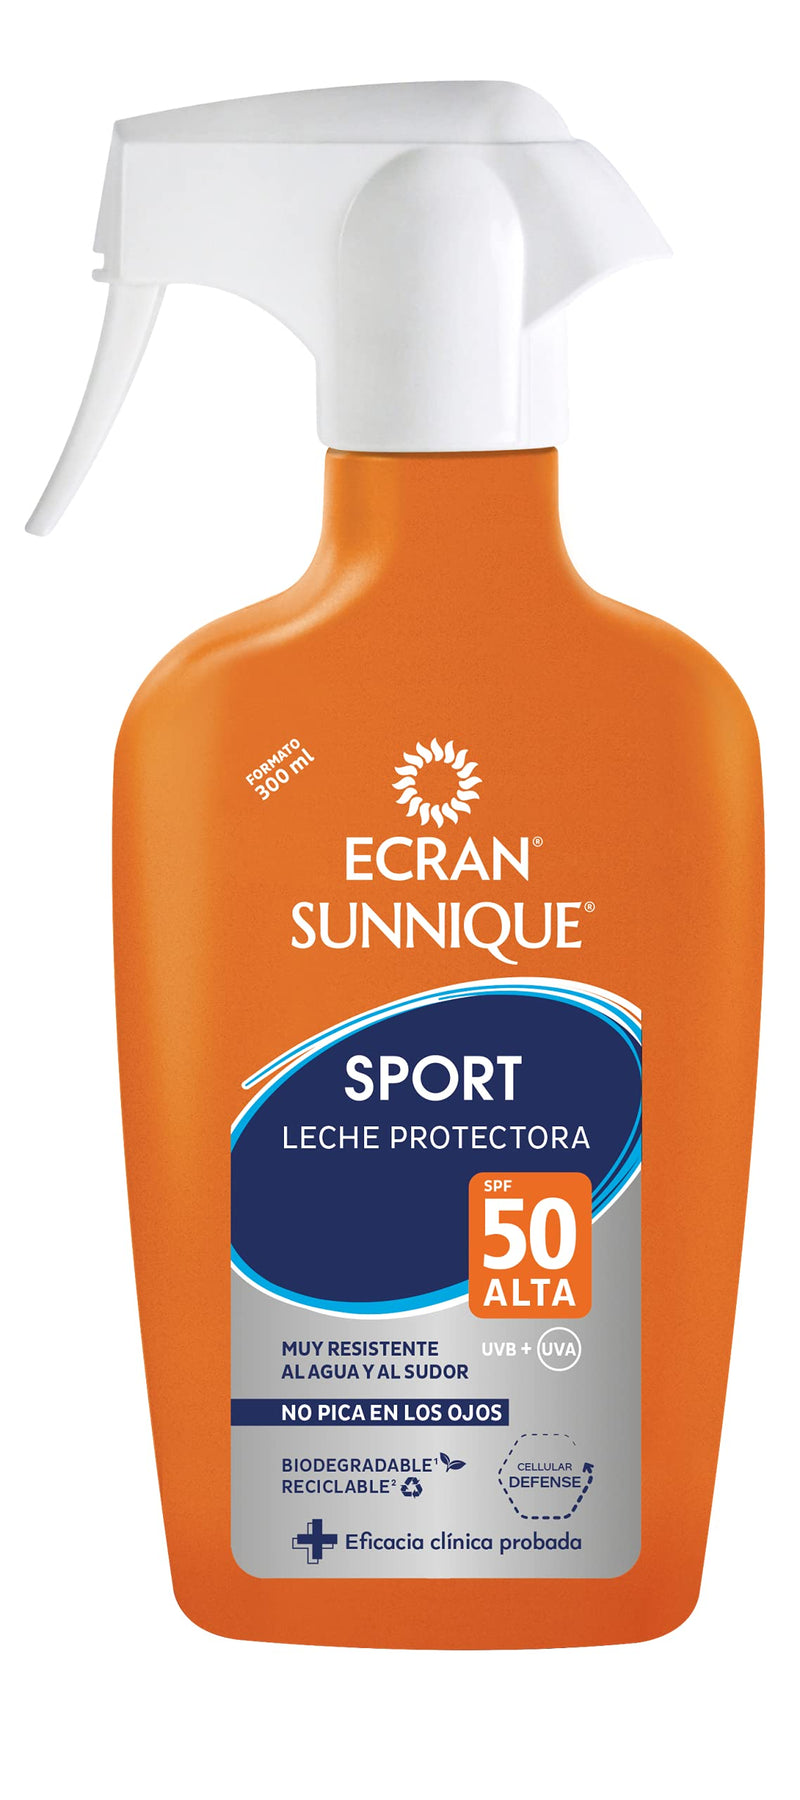 Ecran Sunnique Sport – Protective Sun Milk Spray SPF 50, Highly Water and Sweat Resistant – 300 ml Protective milk 50 - NewNest Australia